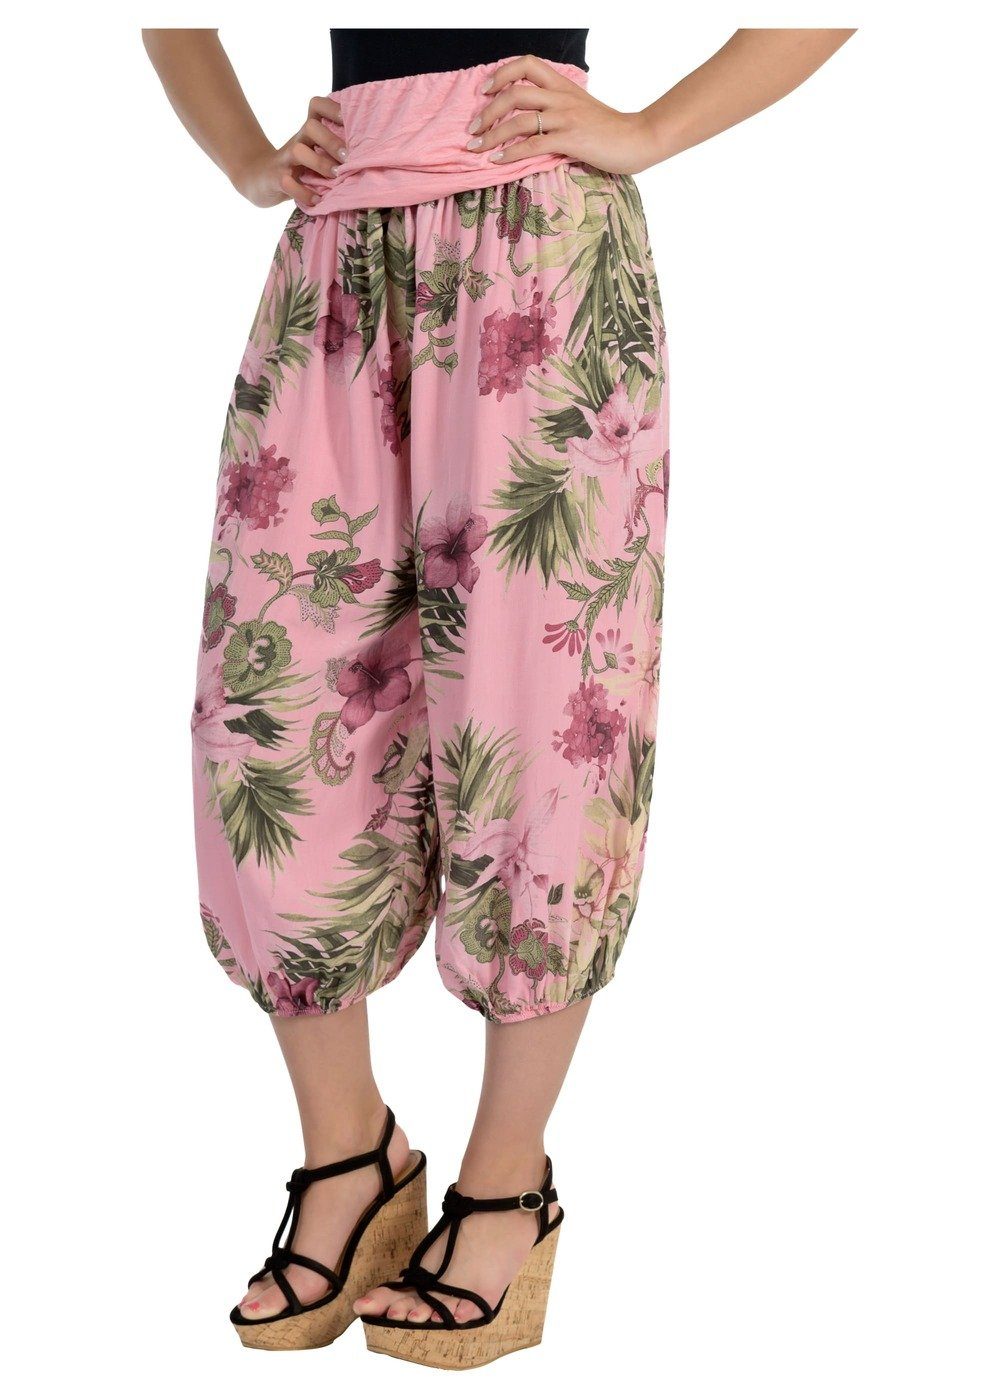 Einheitsgröße mit malito Haremshose rosa more than floralem fashion Aladinhose Muster 8938